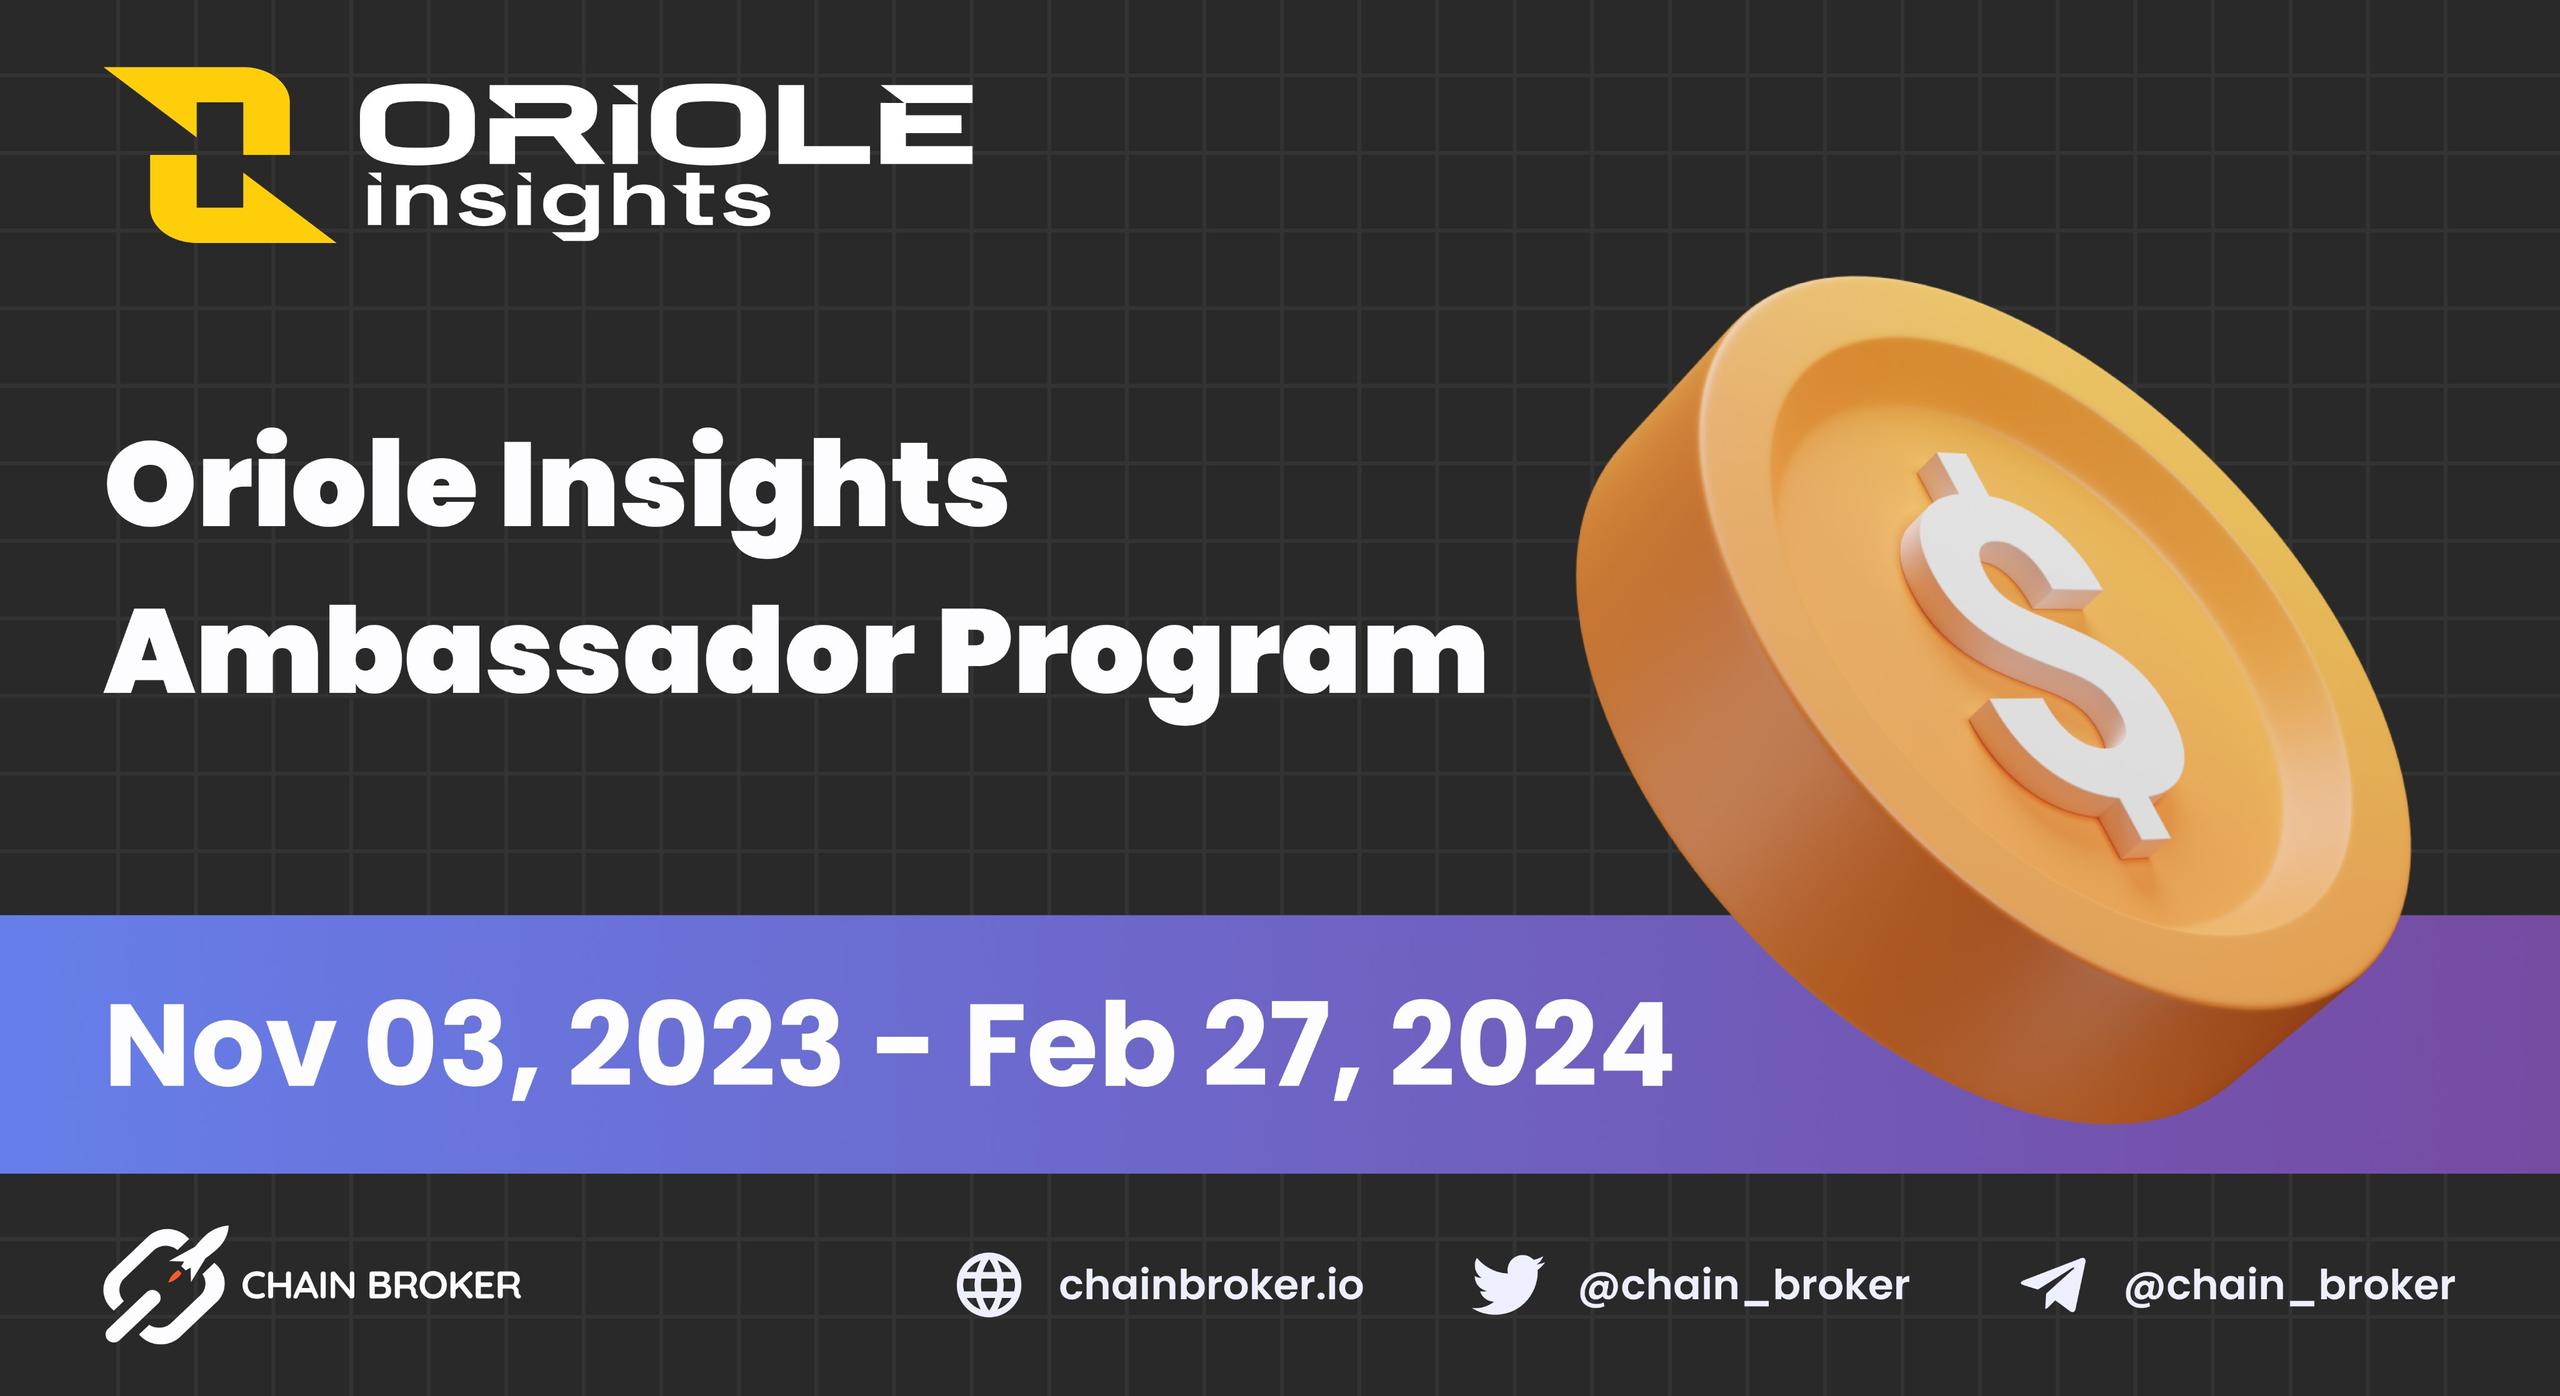 Oriole Insights starts the first season of the Ambassador Program